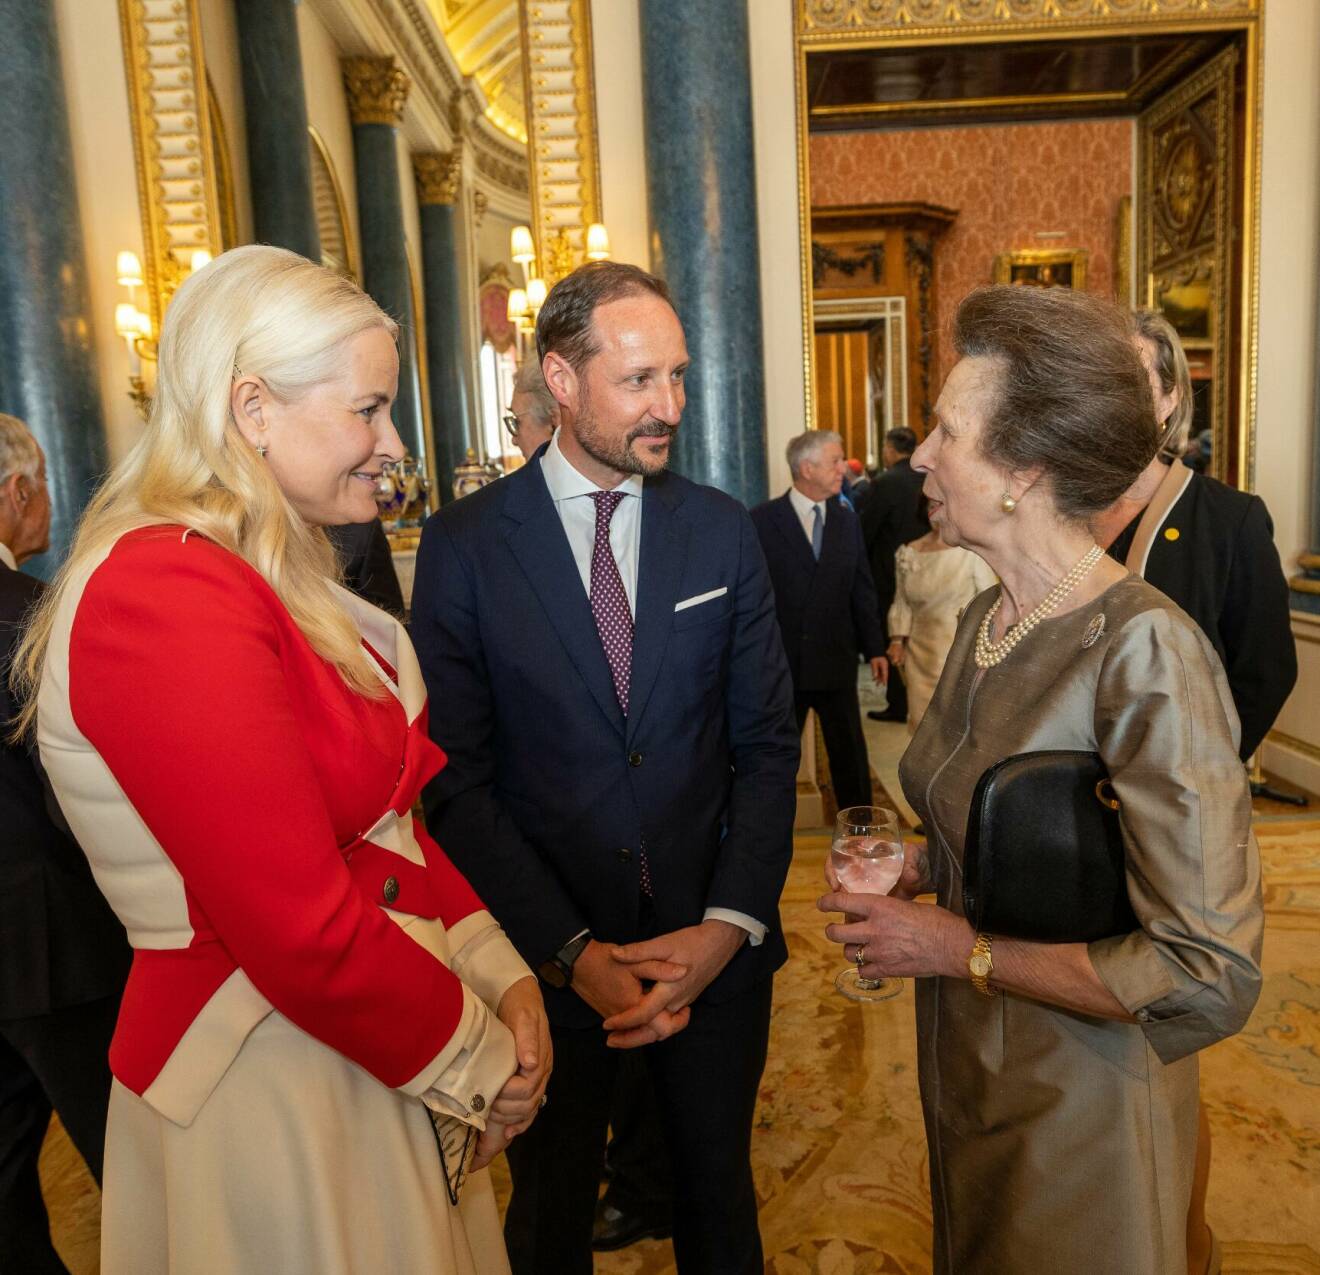 Mette-Marit och Haakon med prinsessan Anne på kung Charles fest på Buckingham Palace